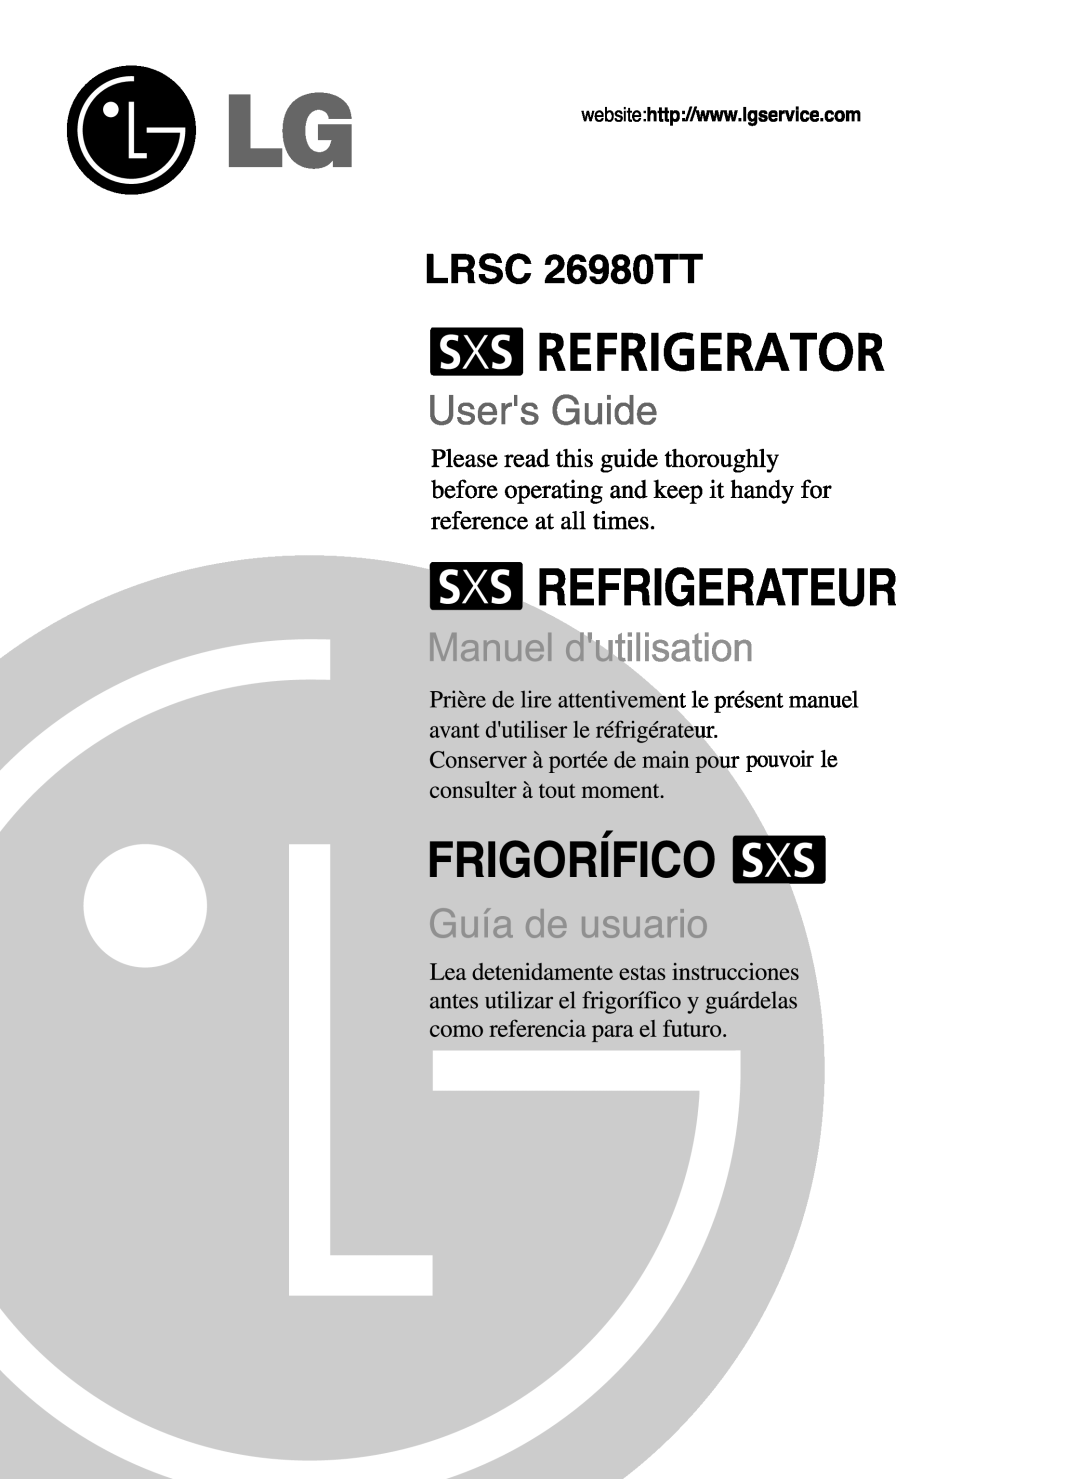 LG Electronics LRSC 26980TT manual 